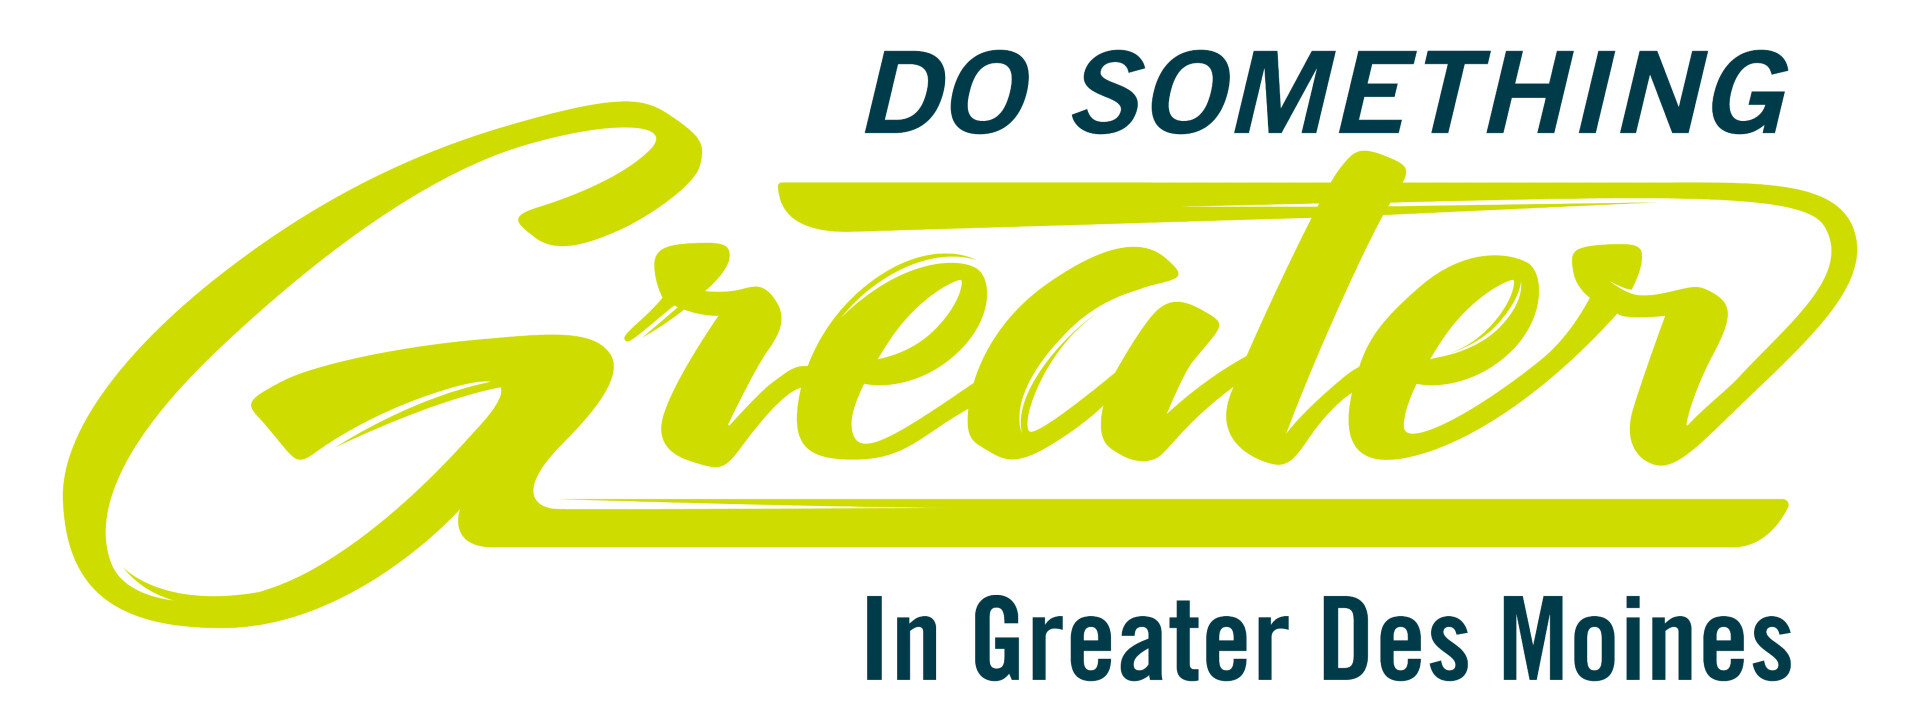 Do Something Greater